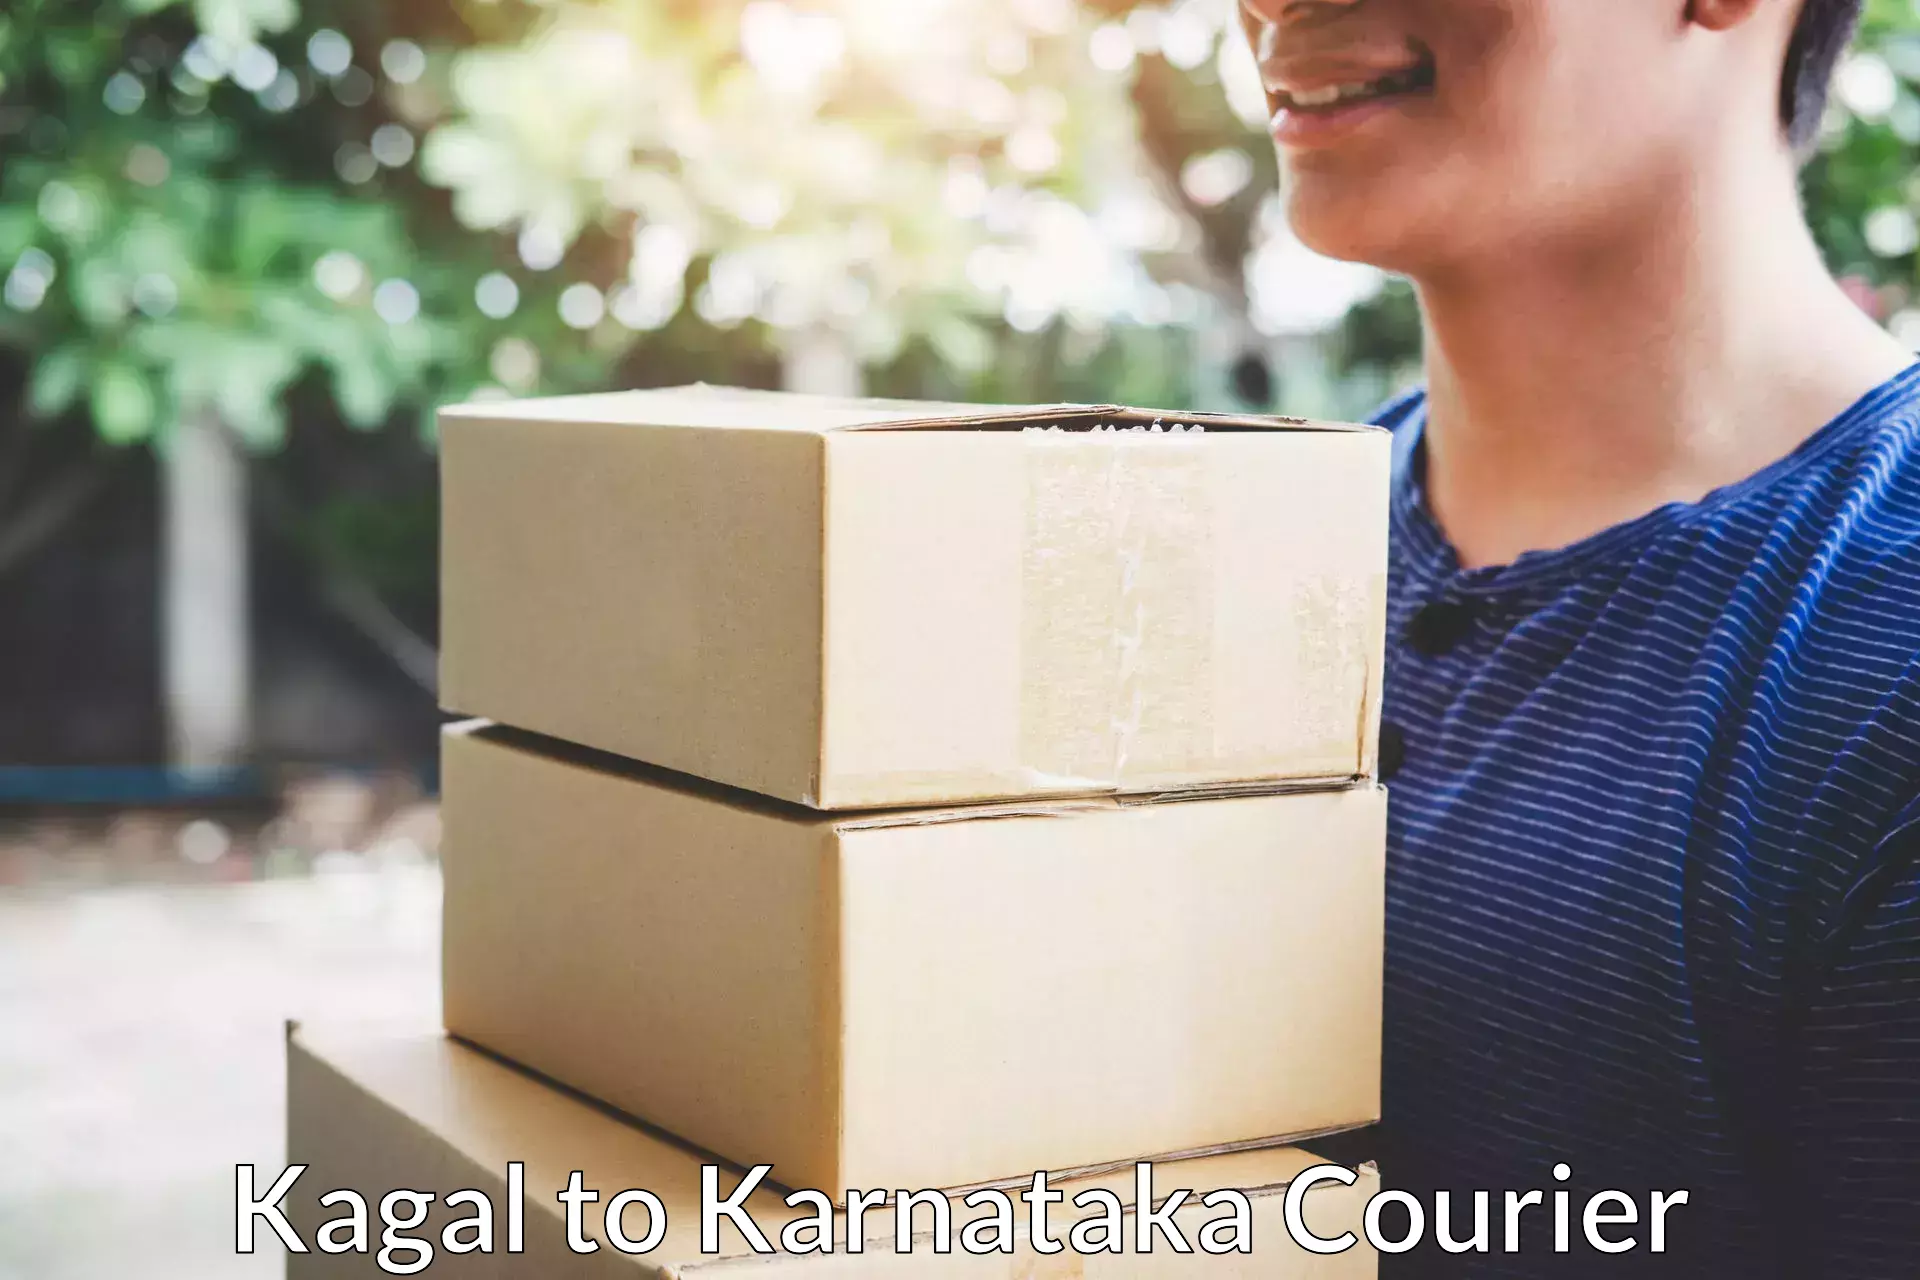 Quality moving company Kagal to yedrami